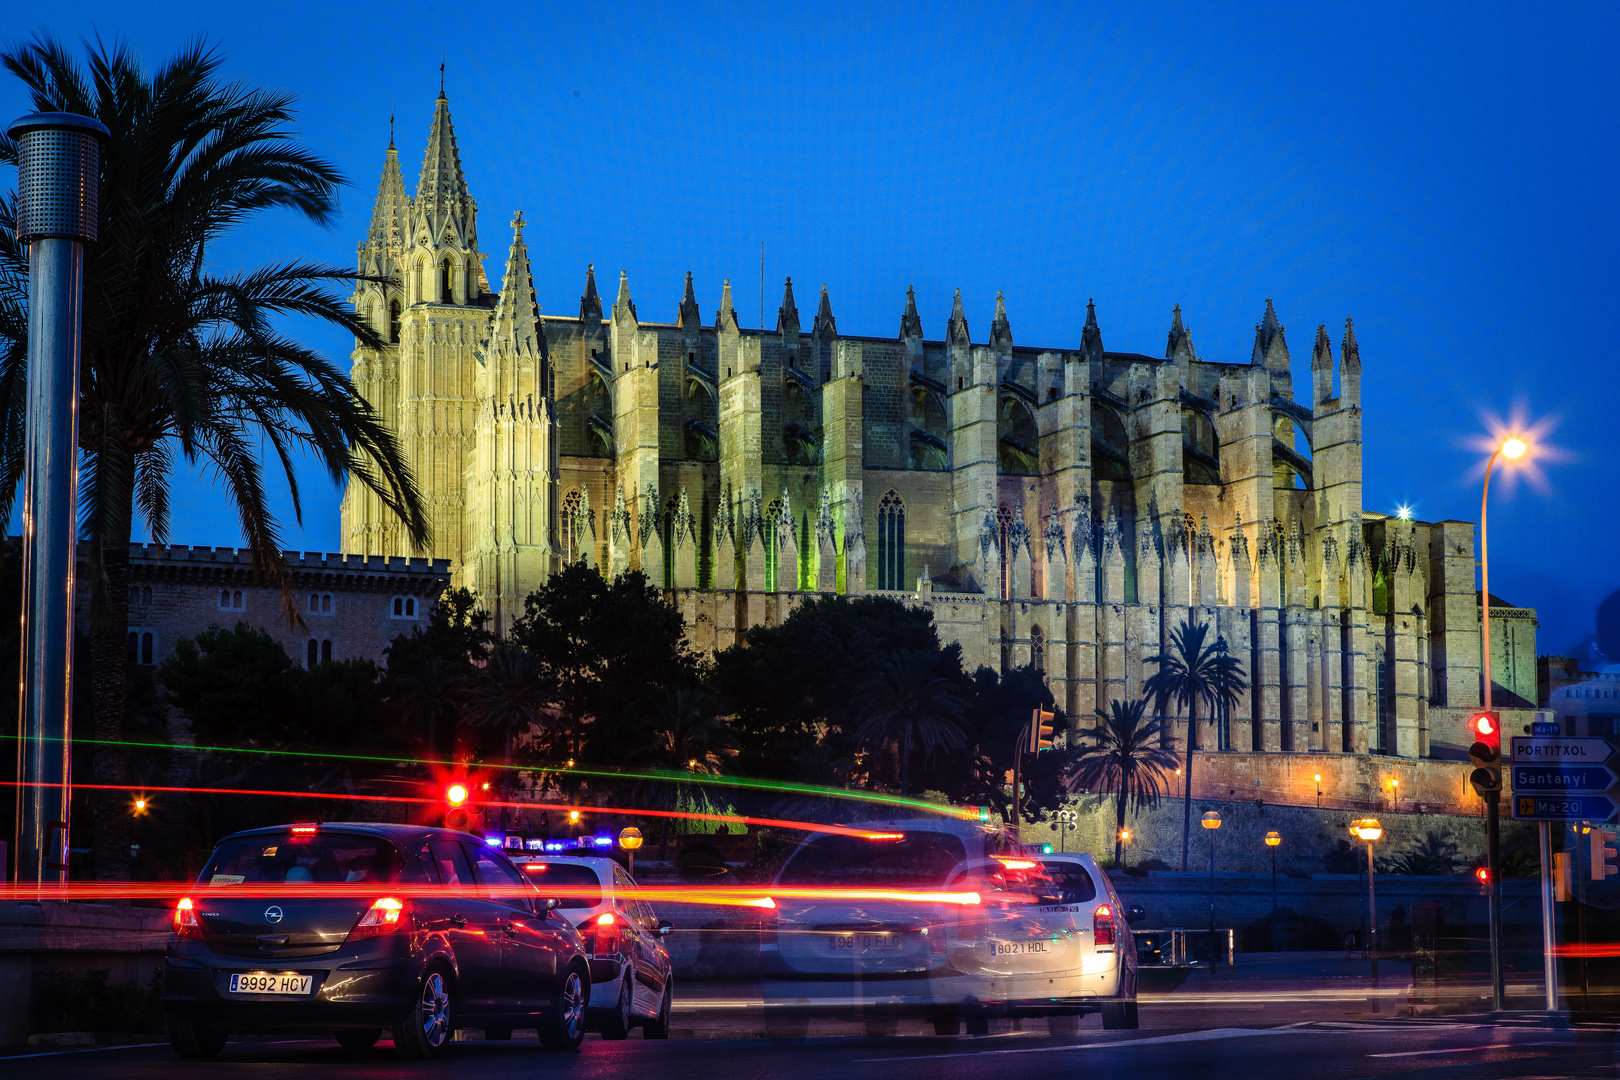 Kathedrale von Palma, Mallorca